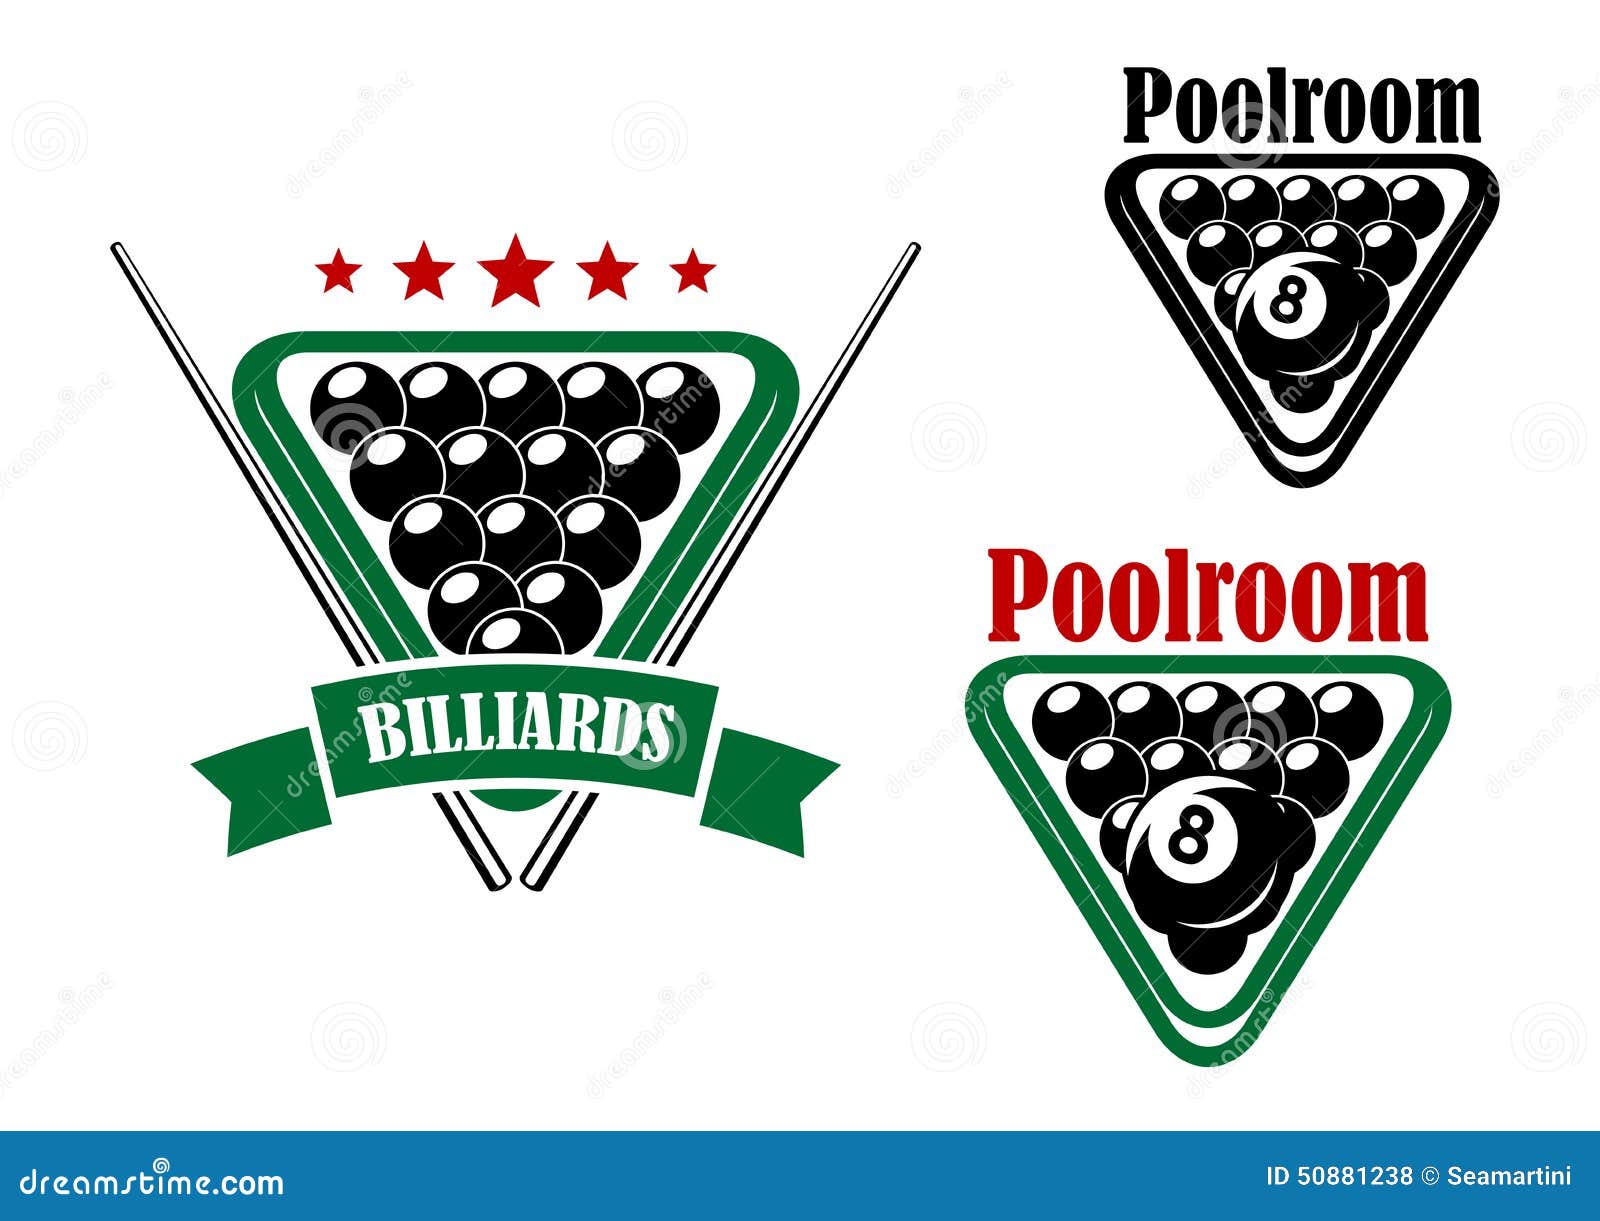 Billiard or Poolroom Emblem Stock Vector - Illustration of billiards ...